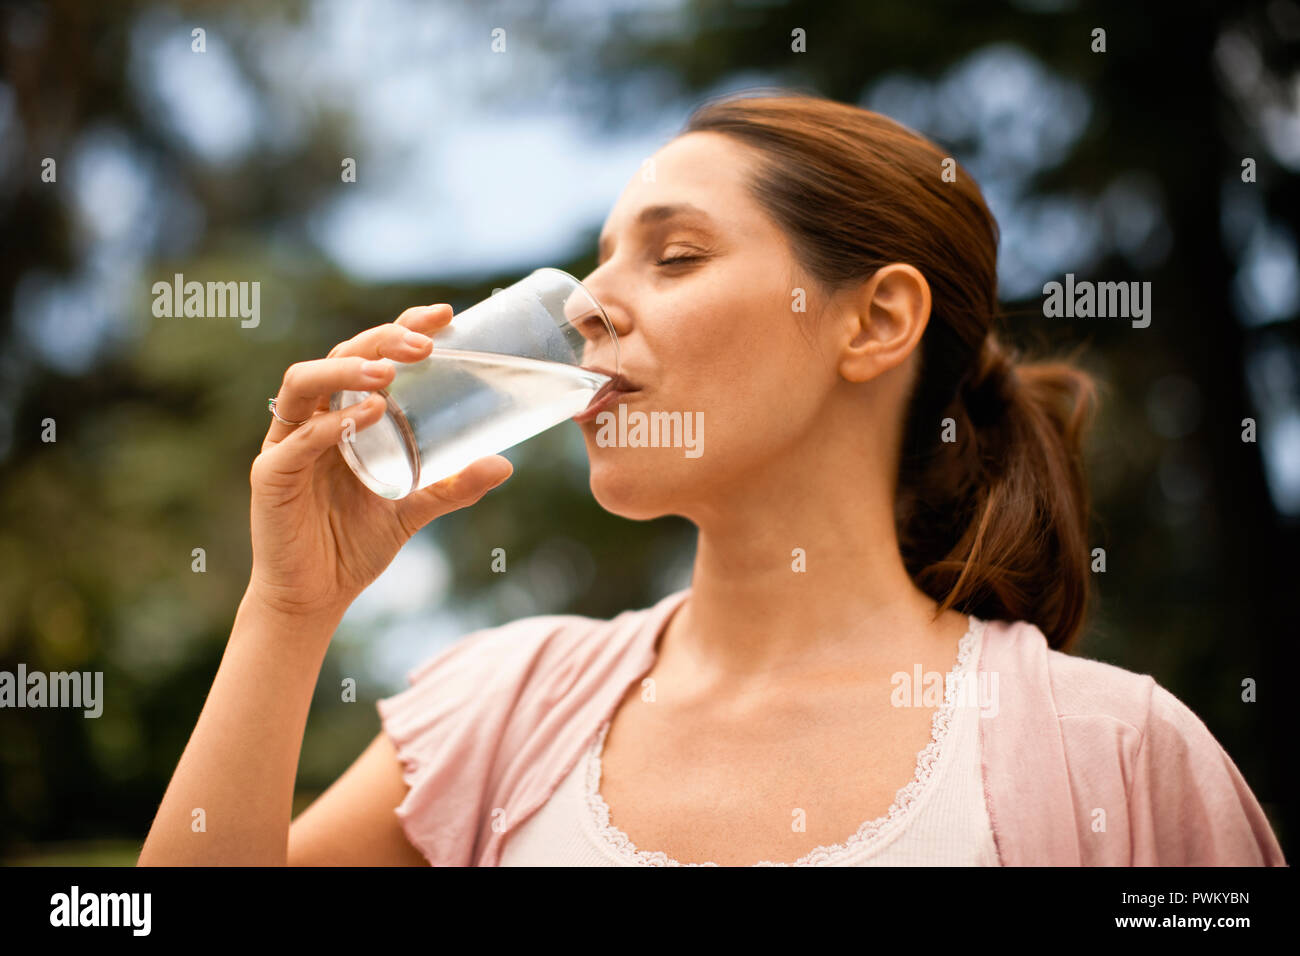 Twenty something woman drinks a glass of water. Stock Photo